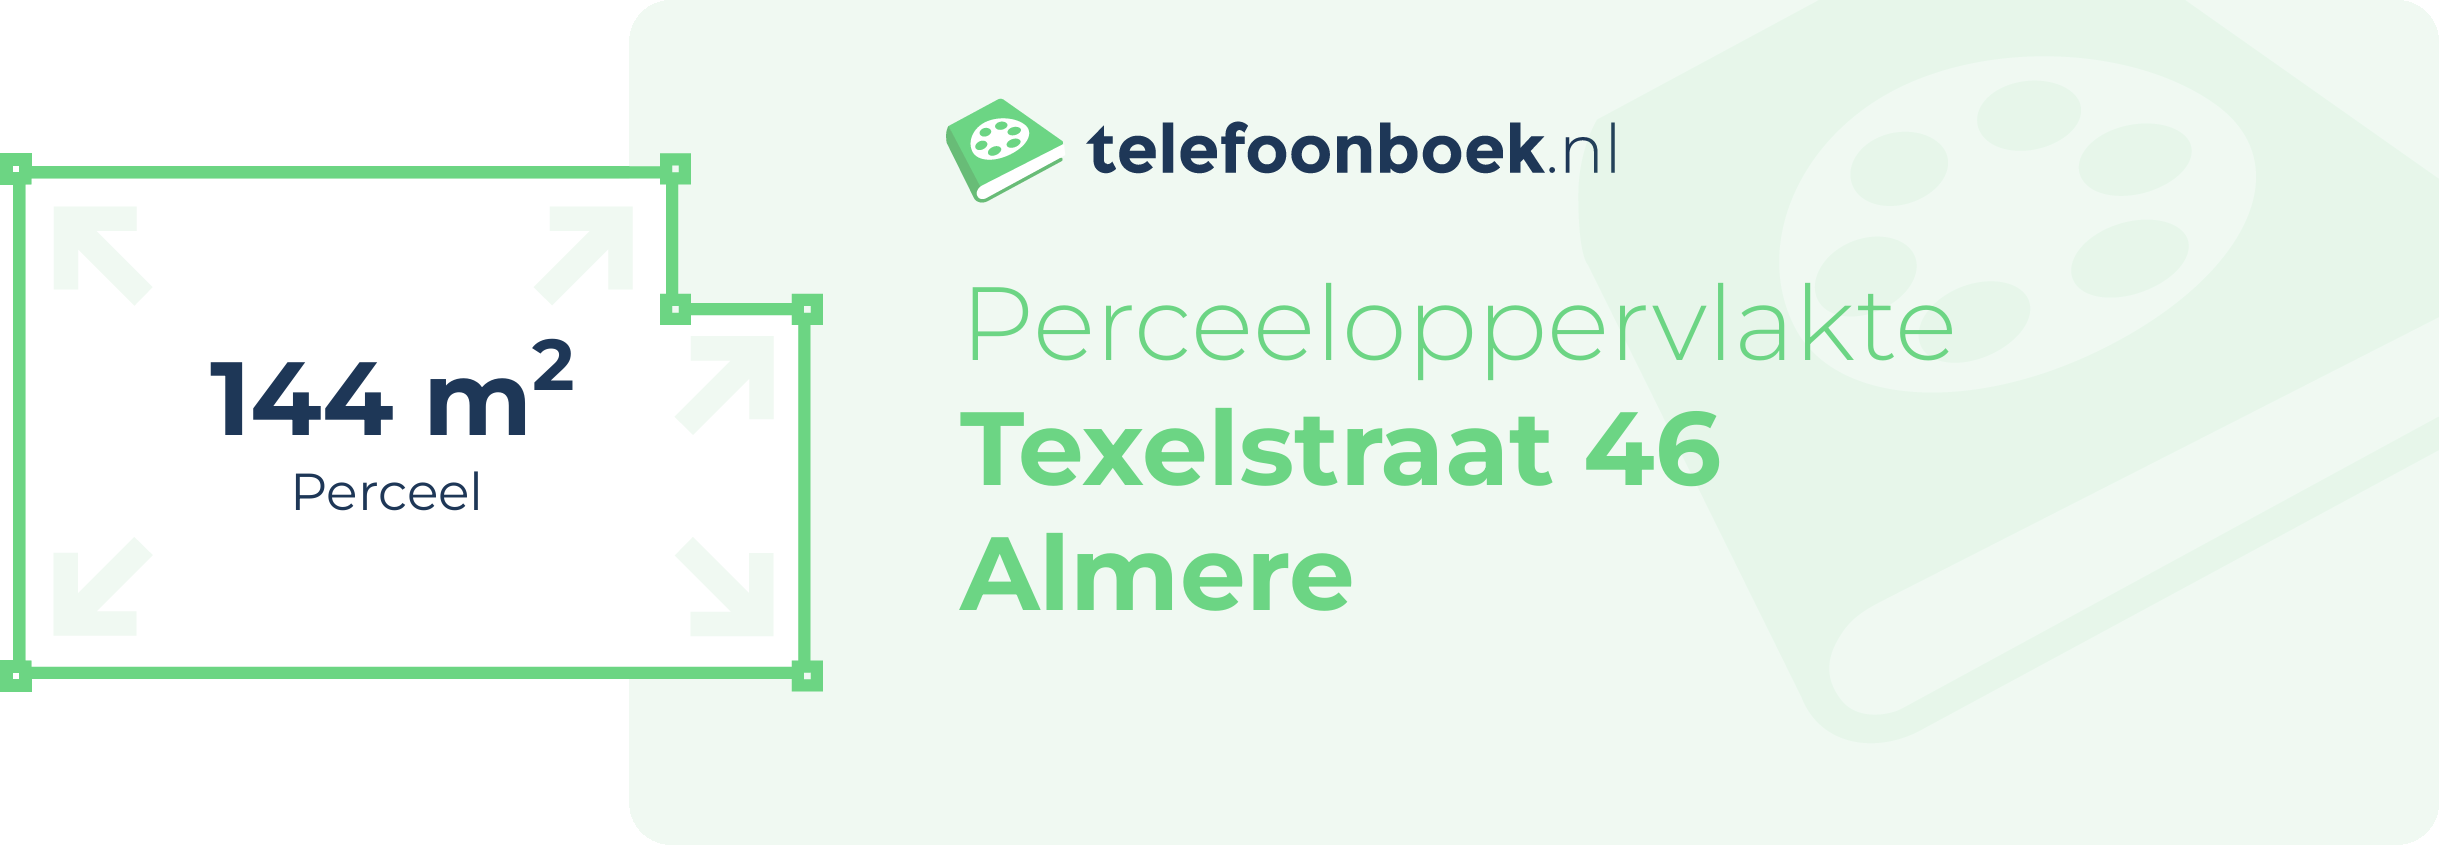 Perceeloppervlakte Texelstraat 46 Almere